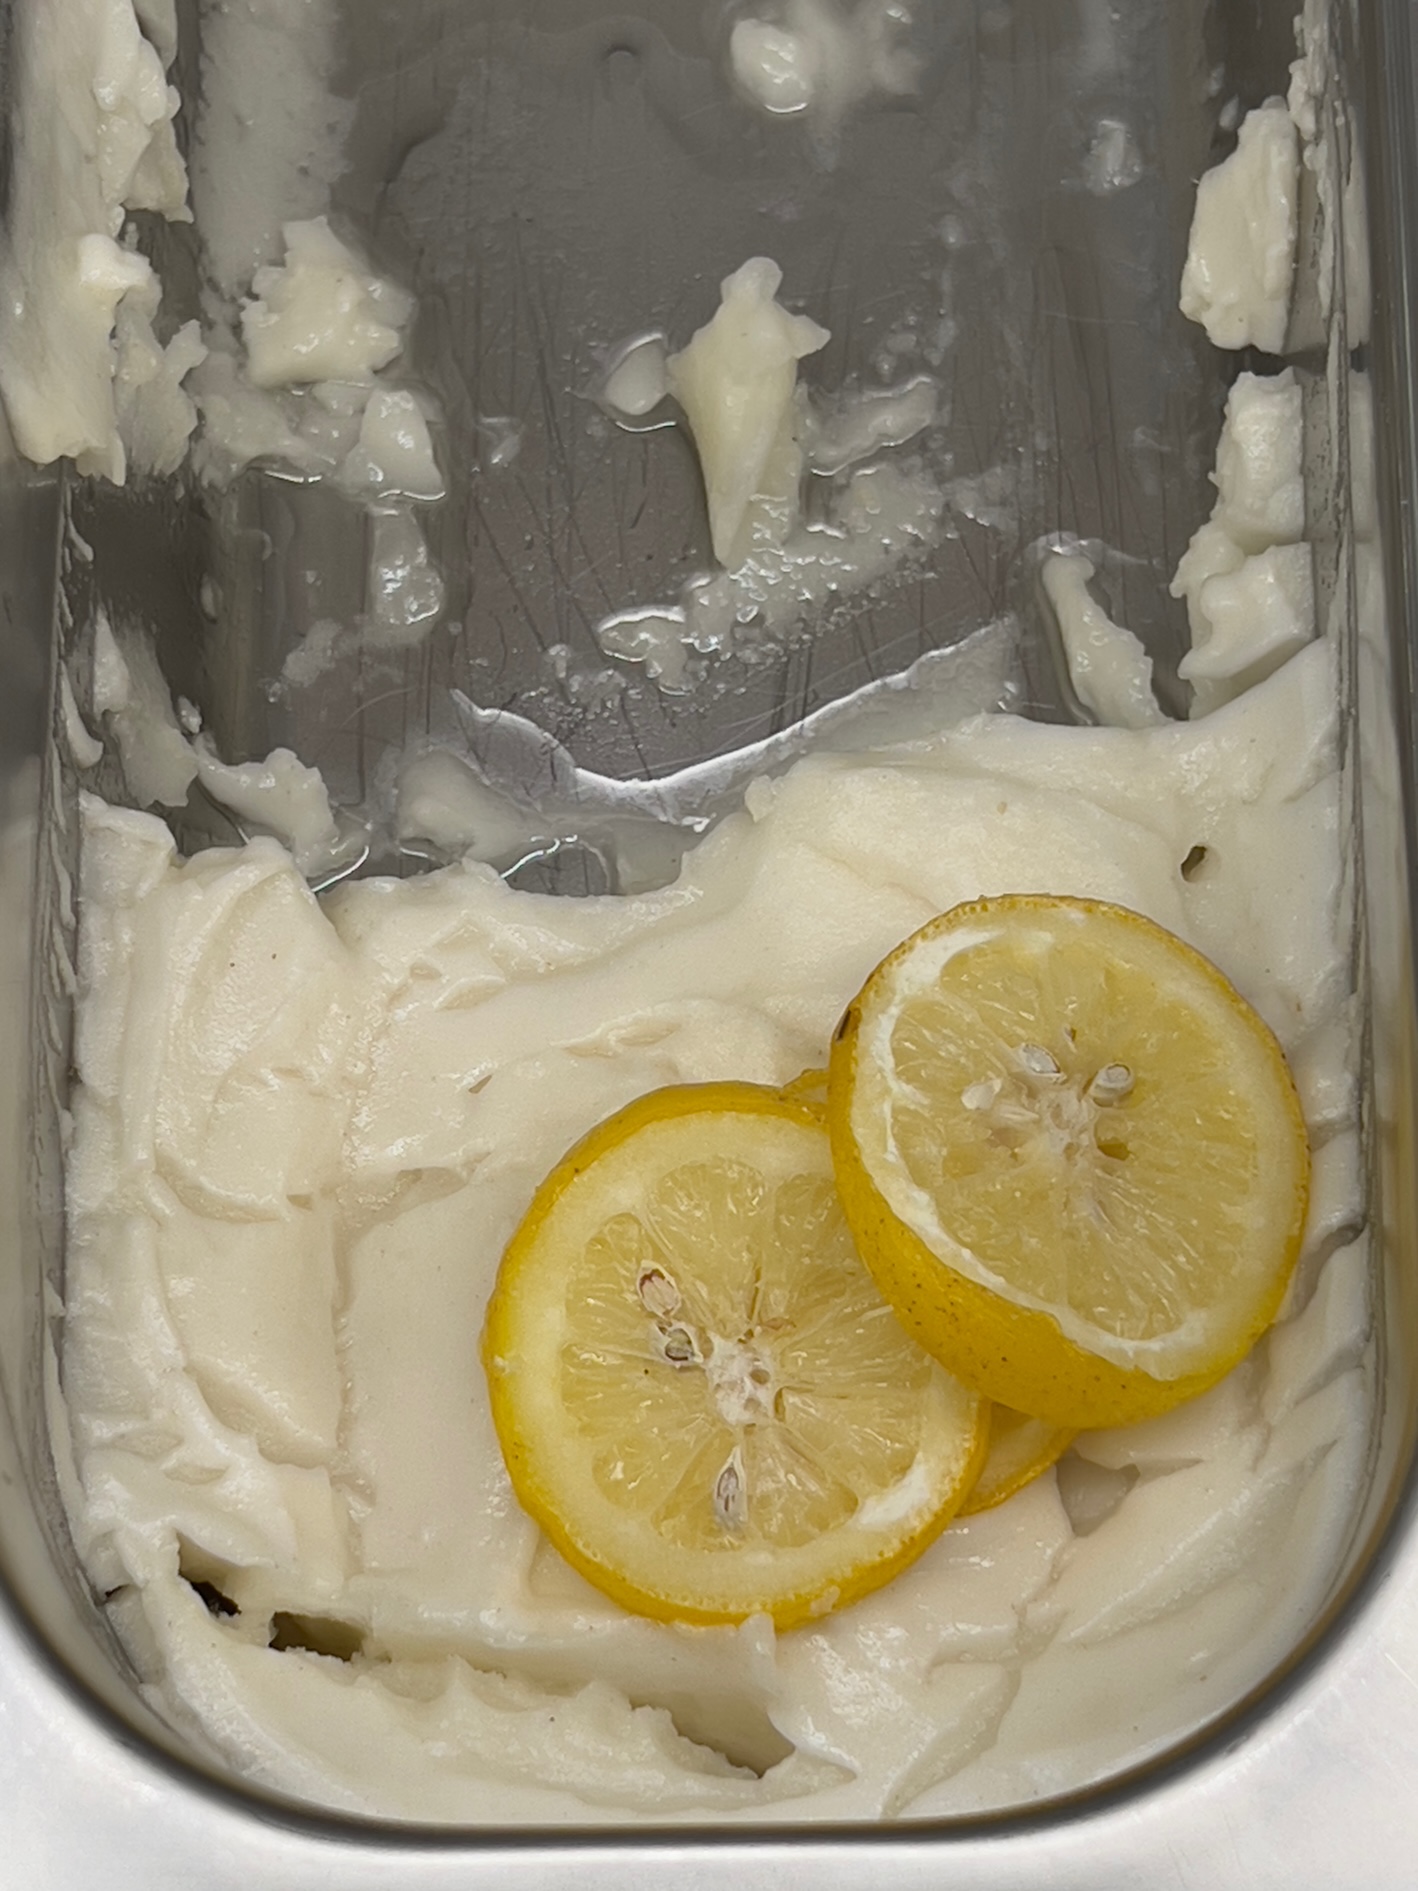 Artigianale lemon gelato, note the dull natural colour.